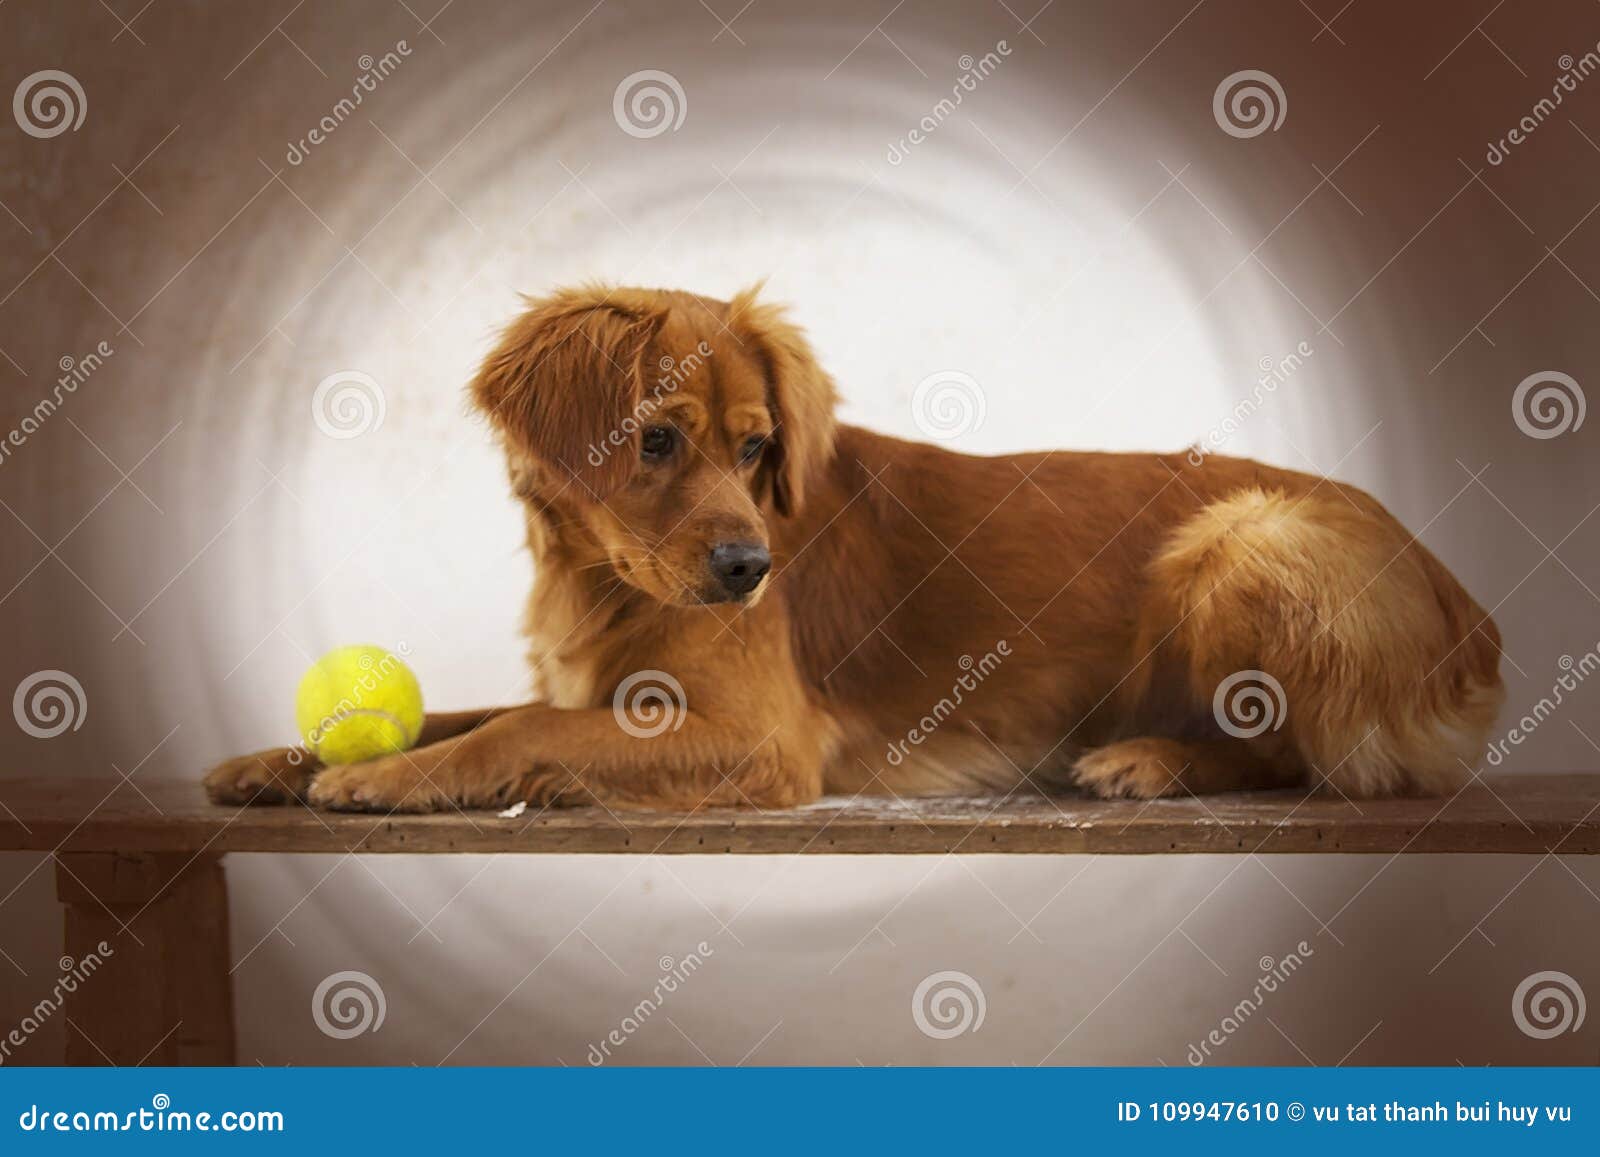 dog. greyhound. dachshund. pet. pets. dog playing. dod food. animalia. animal. canis. canine. ball. dog playing with ball.